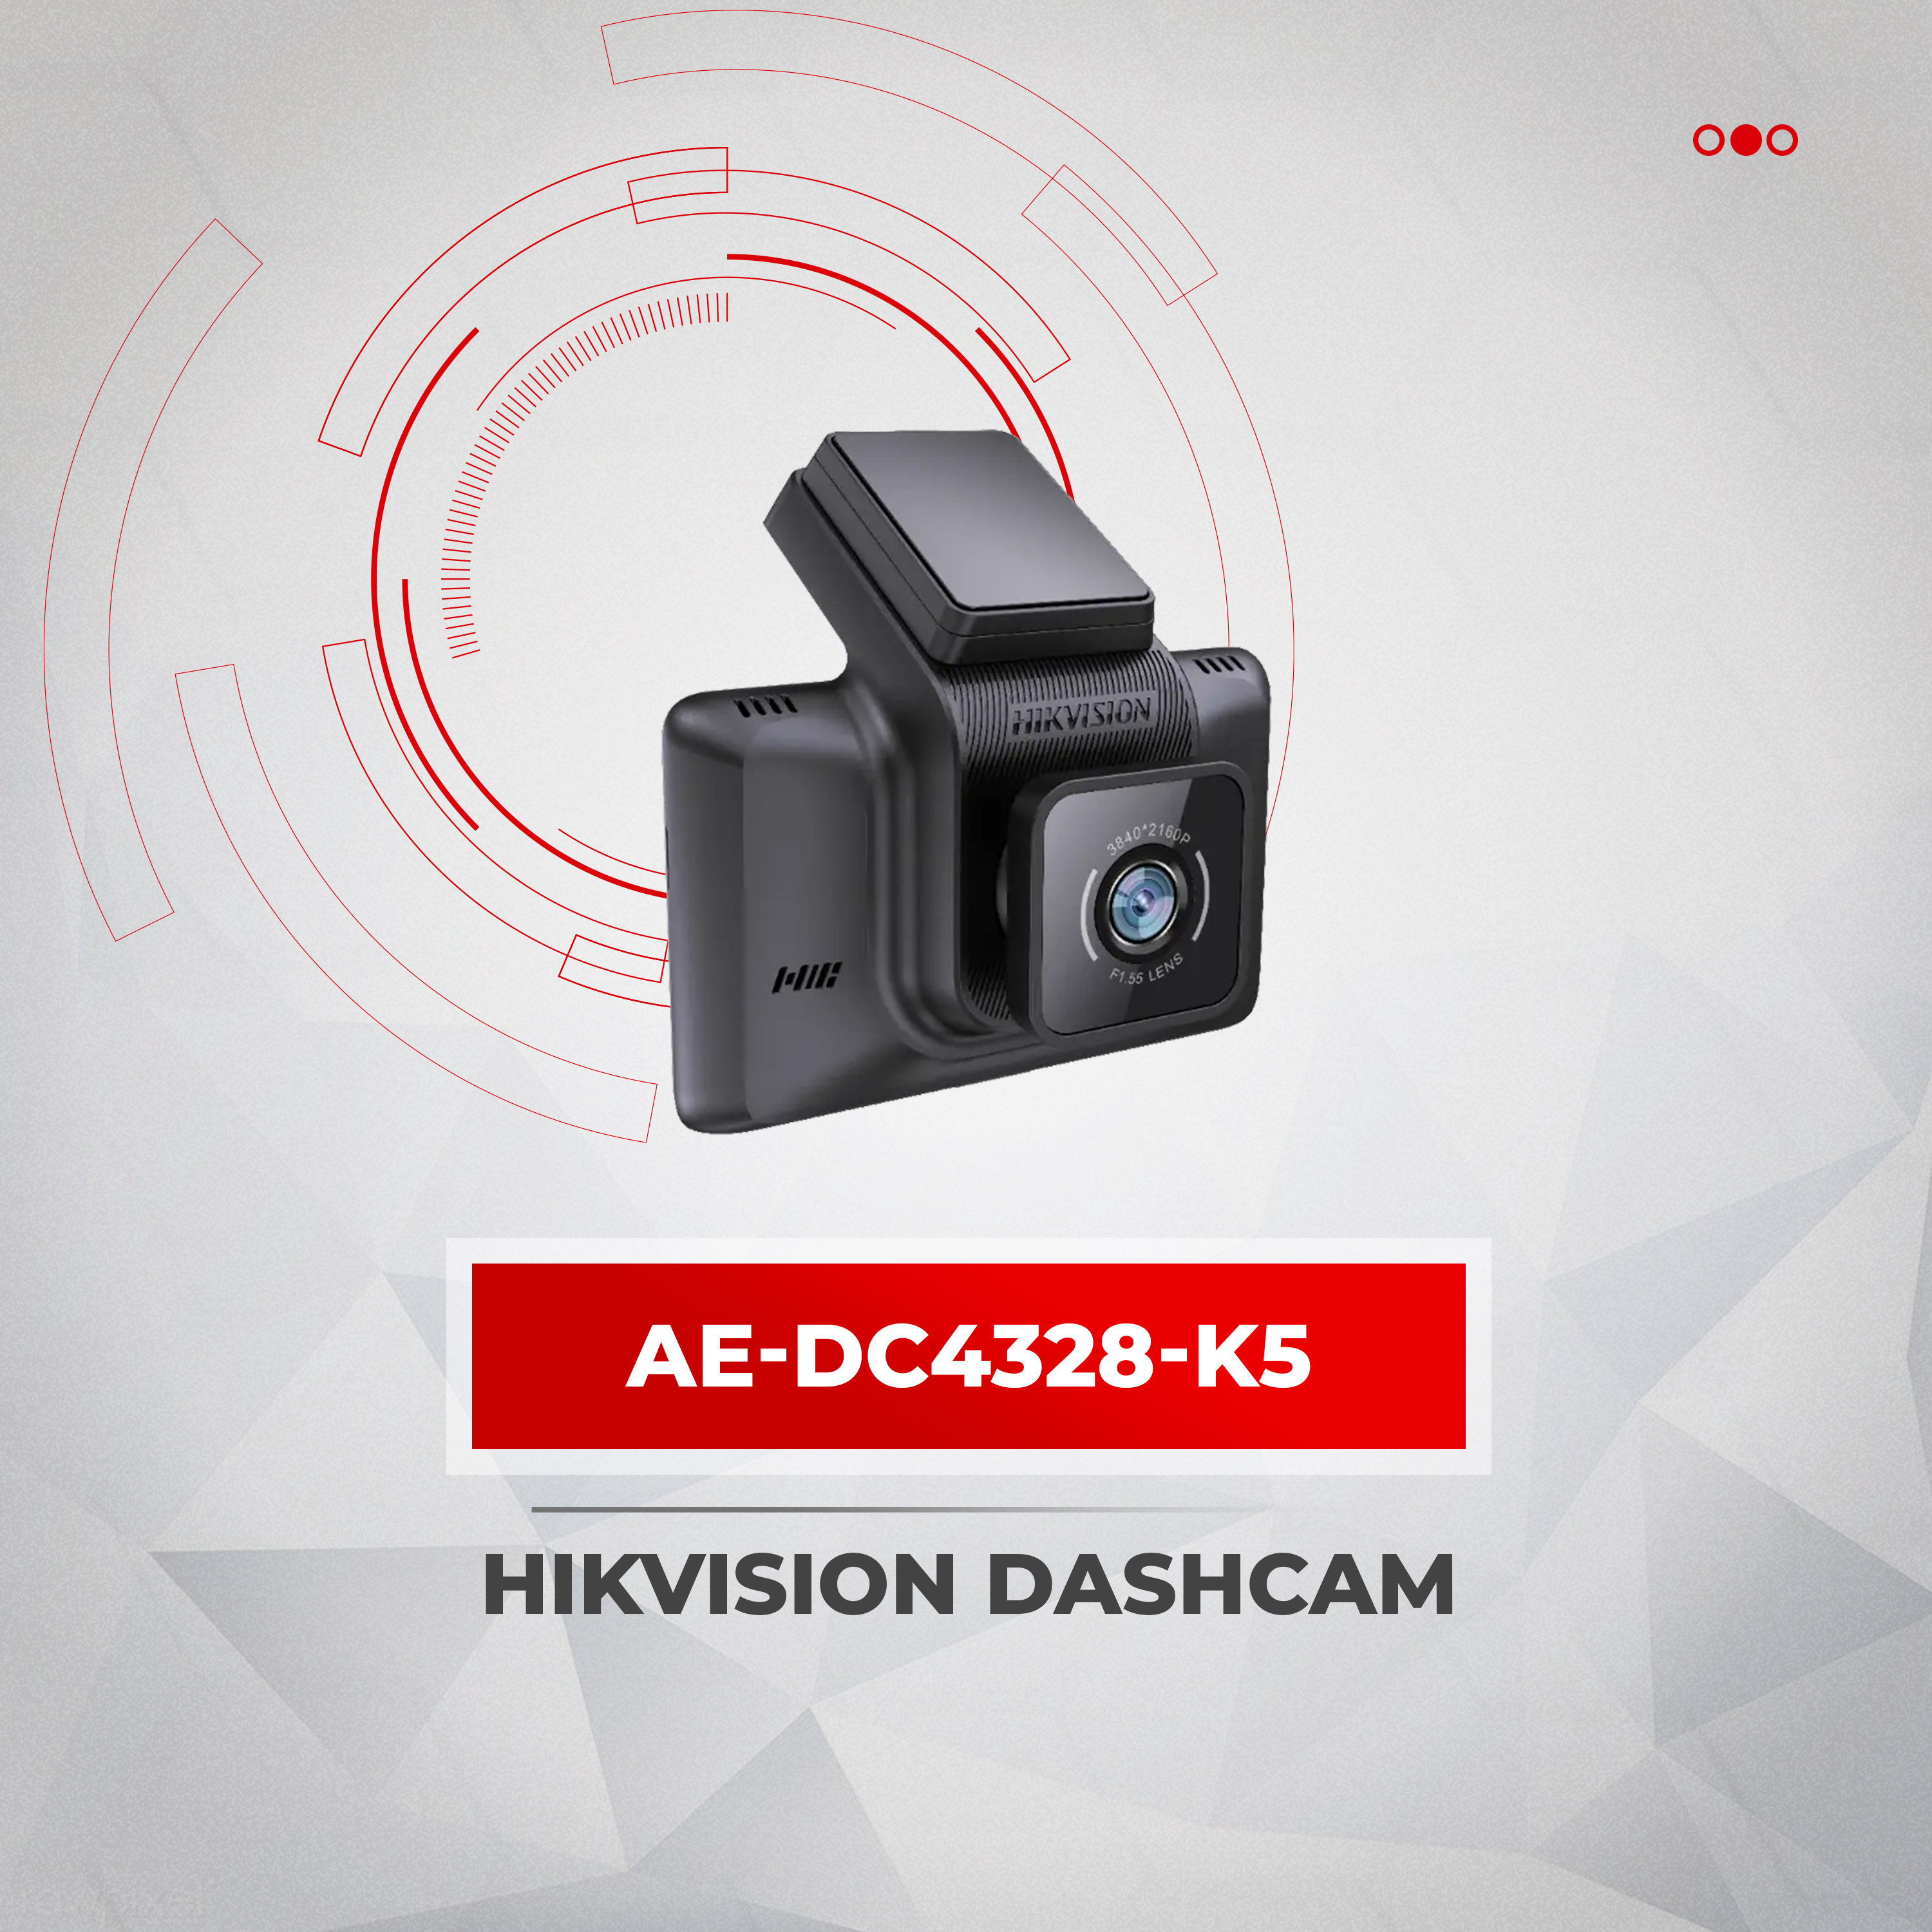 Hikvision 2ch Dashcam Wi Fi Cctv Security Surveillance Camera 